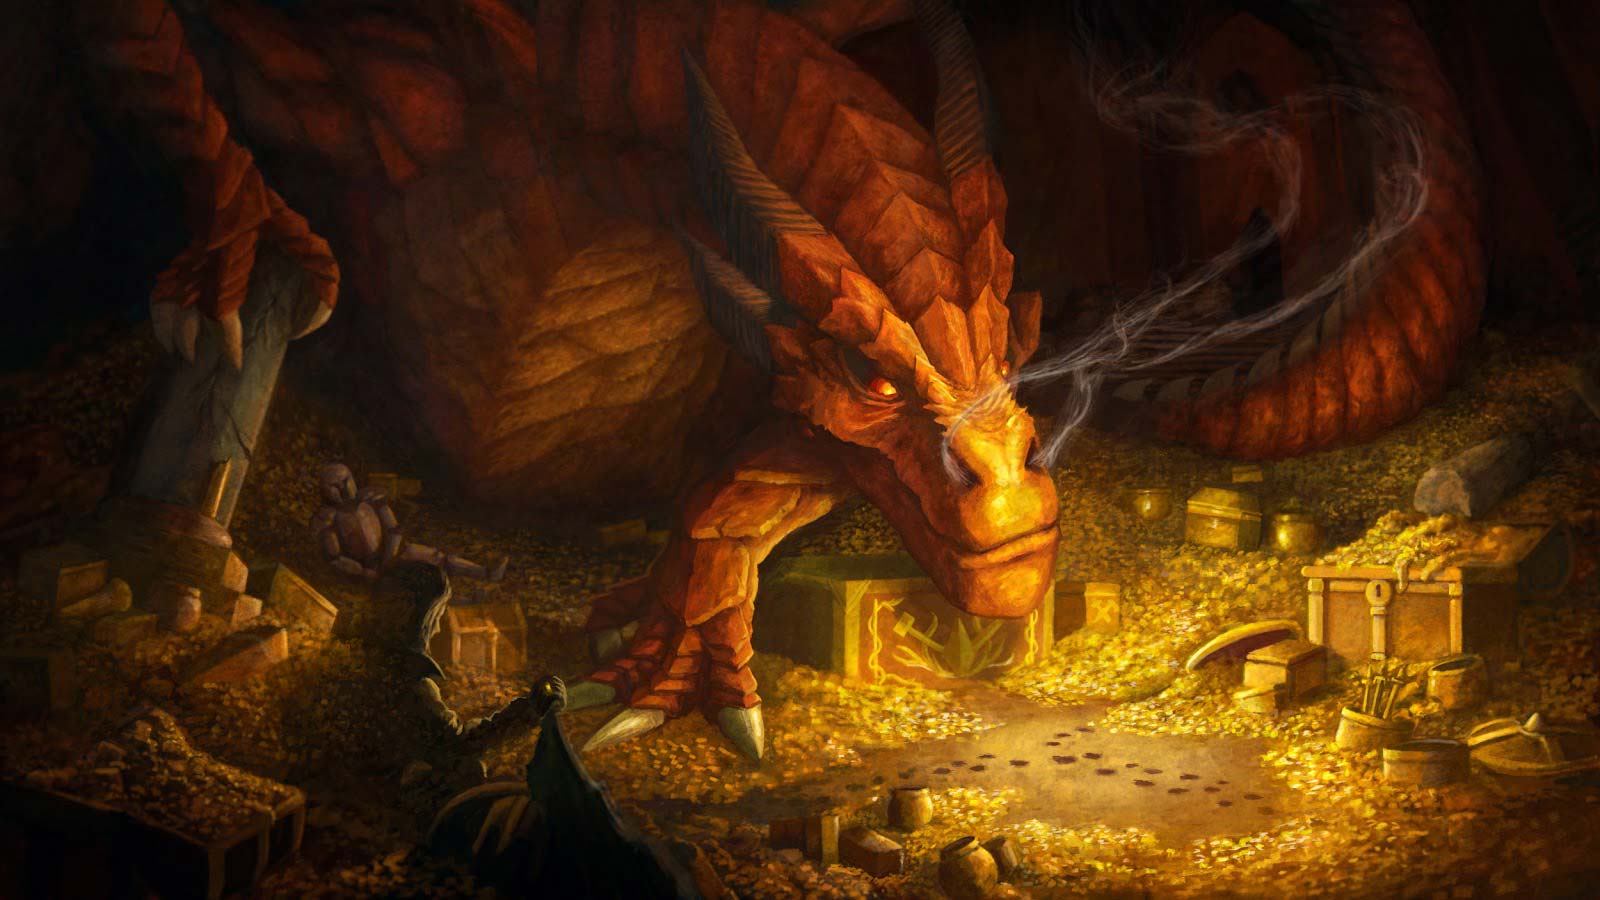 Download 1600x900 The Hobbit: Desolation of Smaug HD Wallpaper